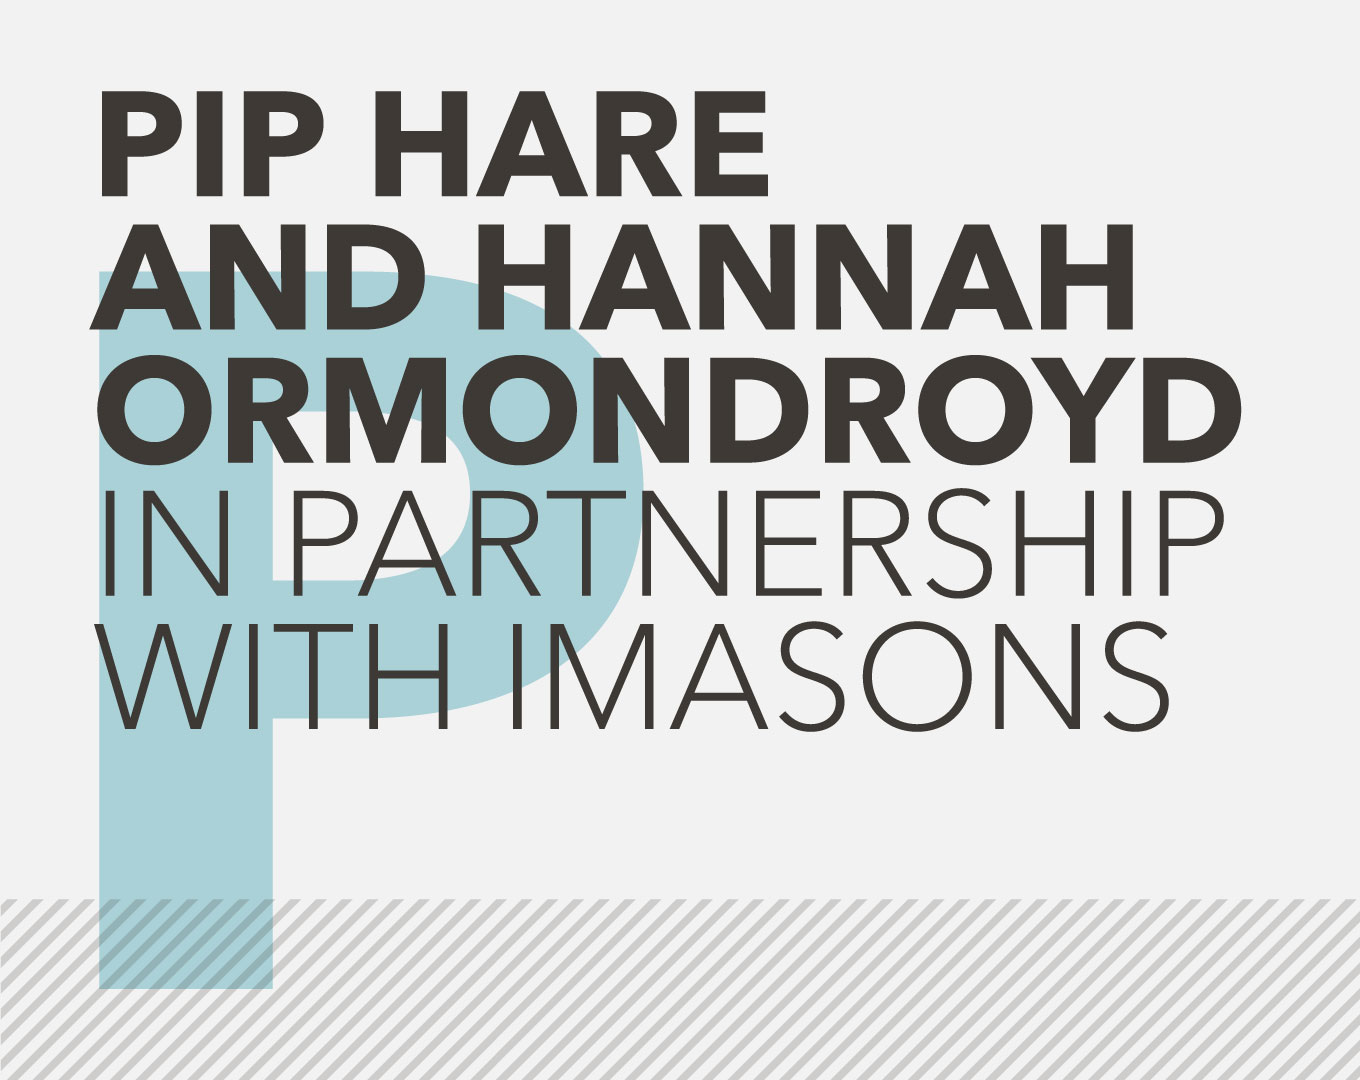 Pip Hare and Hannah Ormondroyd in partnership with iMasons